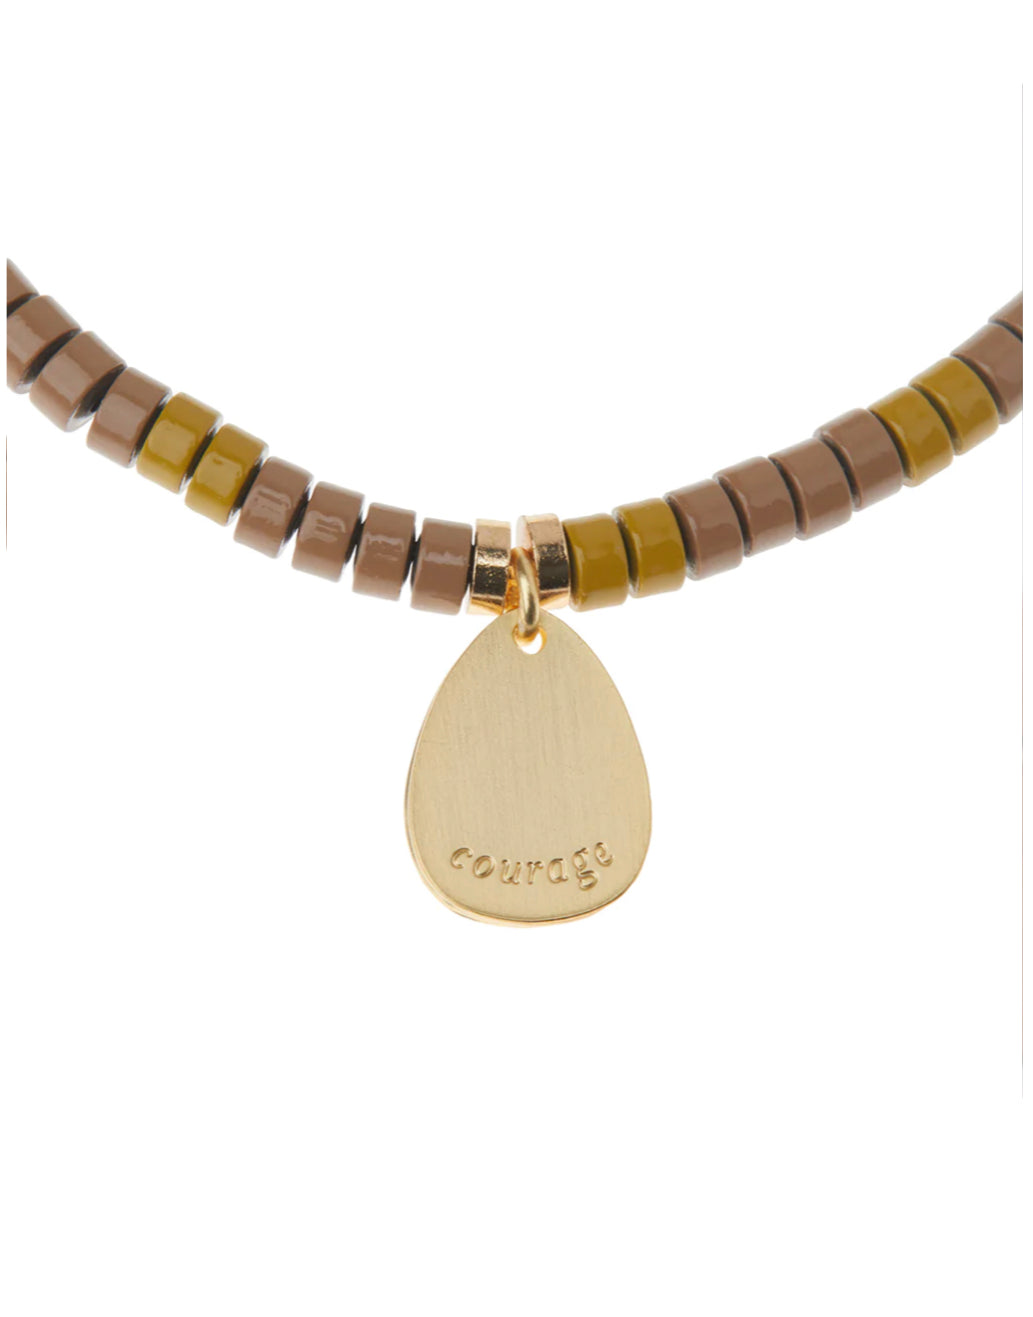 Intention Charm Bracelet - Amazonite/Gold - Stone Of Courage